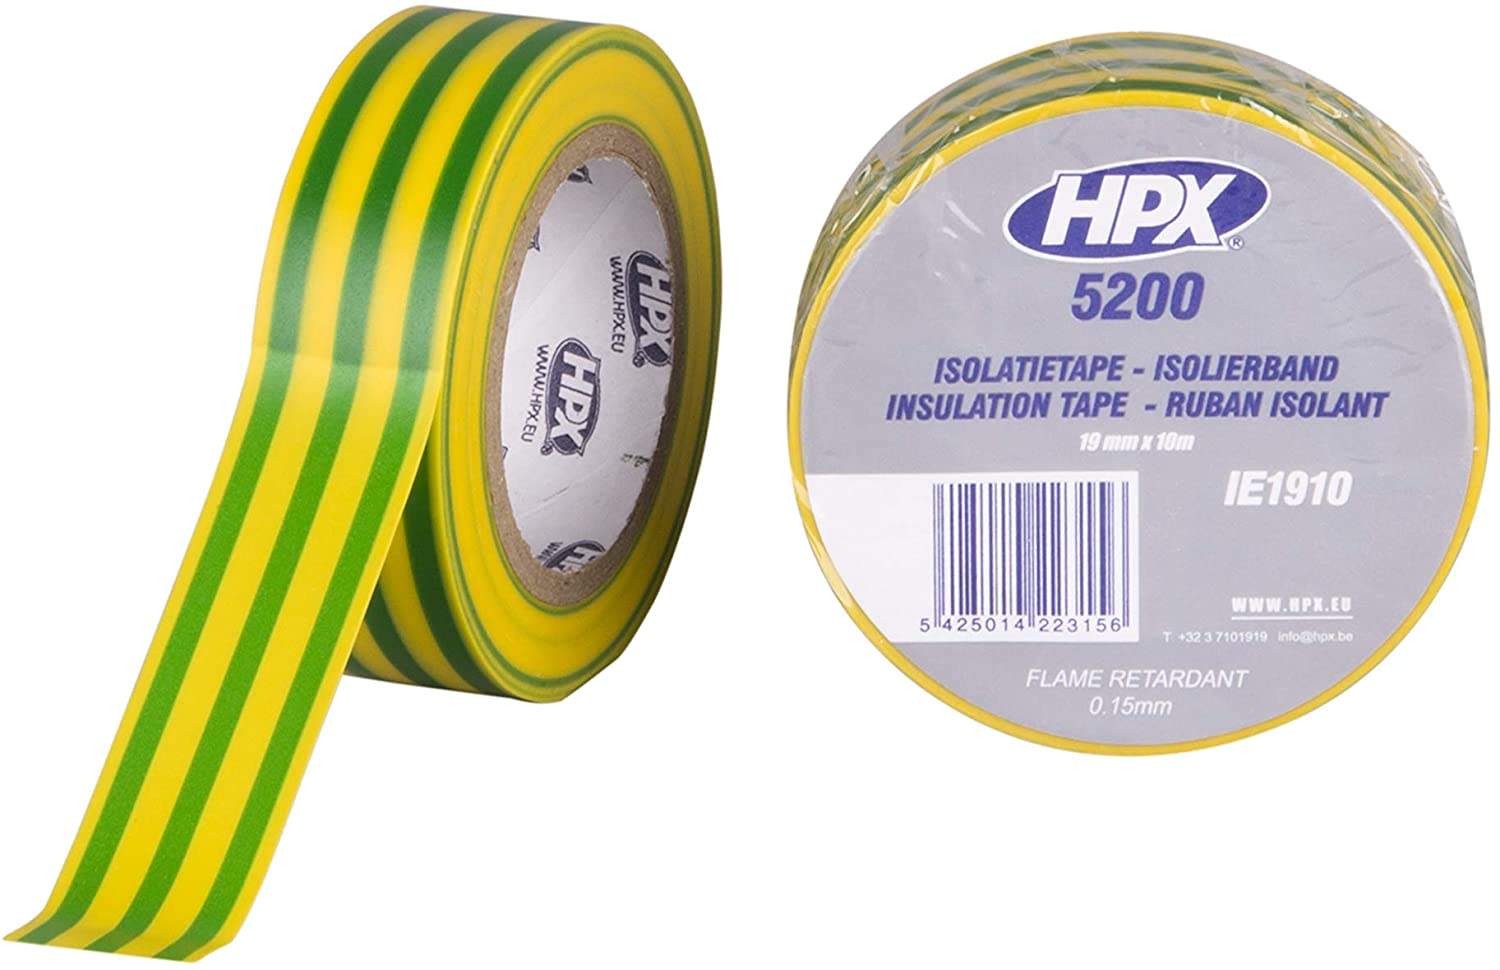 PVC insulation tape TAPE 5200, yellow green, 19mm x 10m